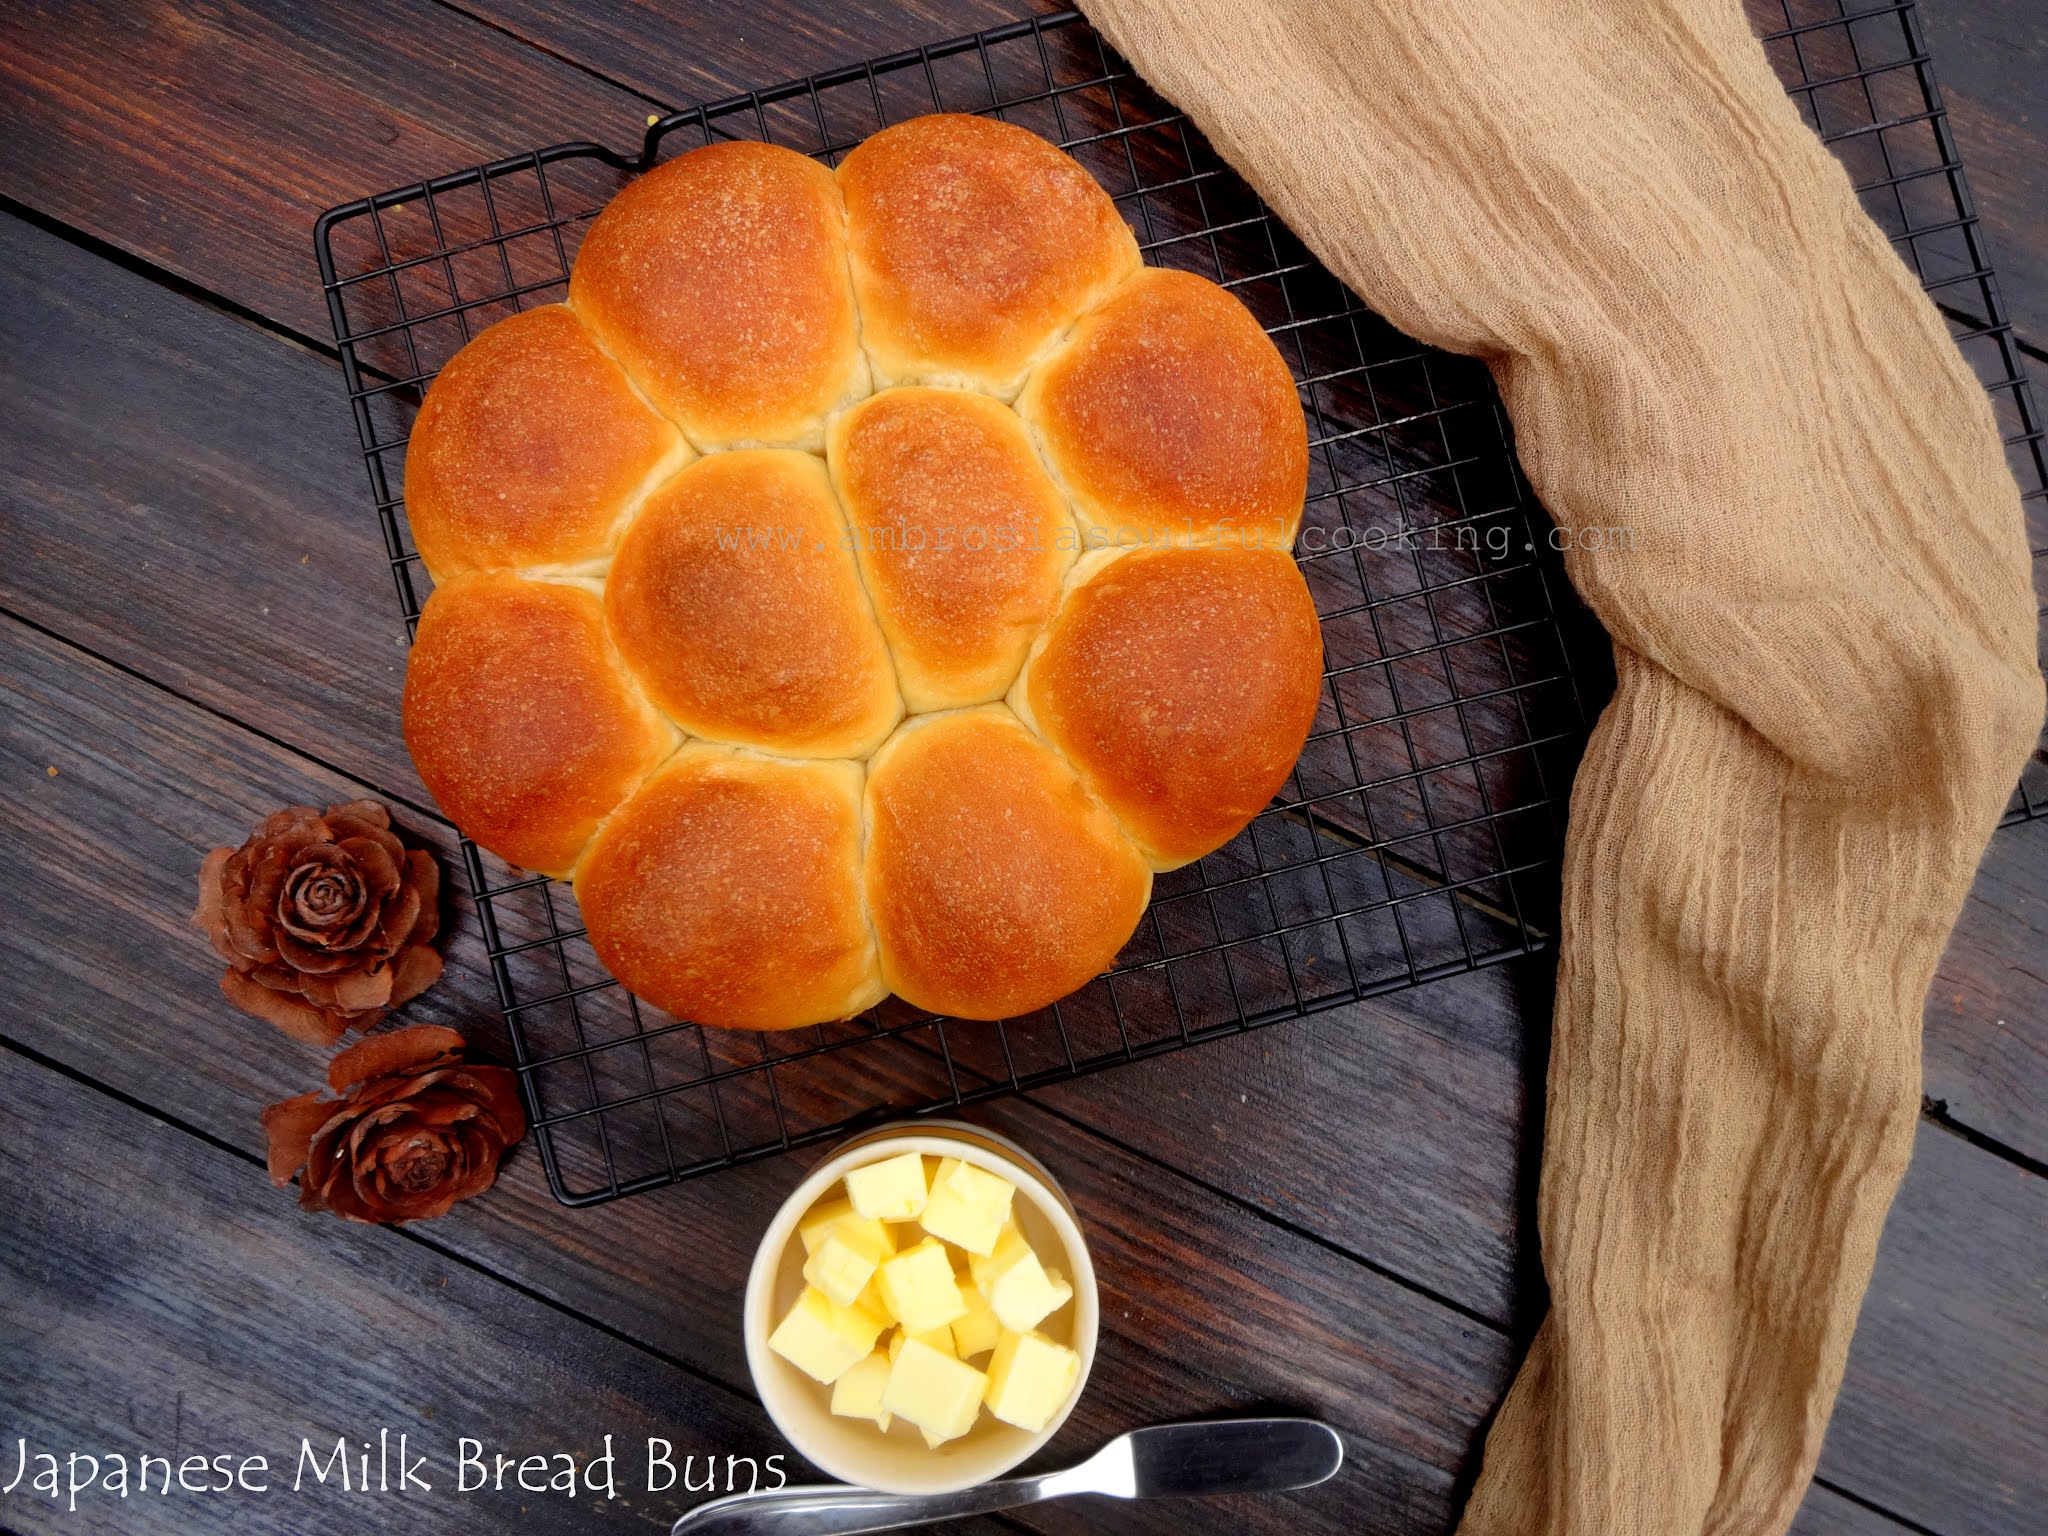 Japanese Milk Bread Rolls Recipe